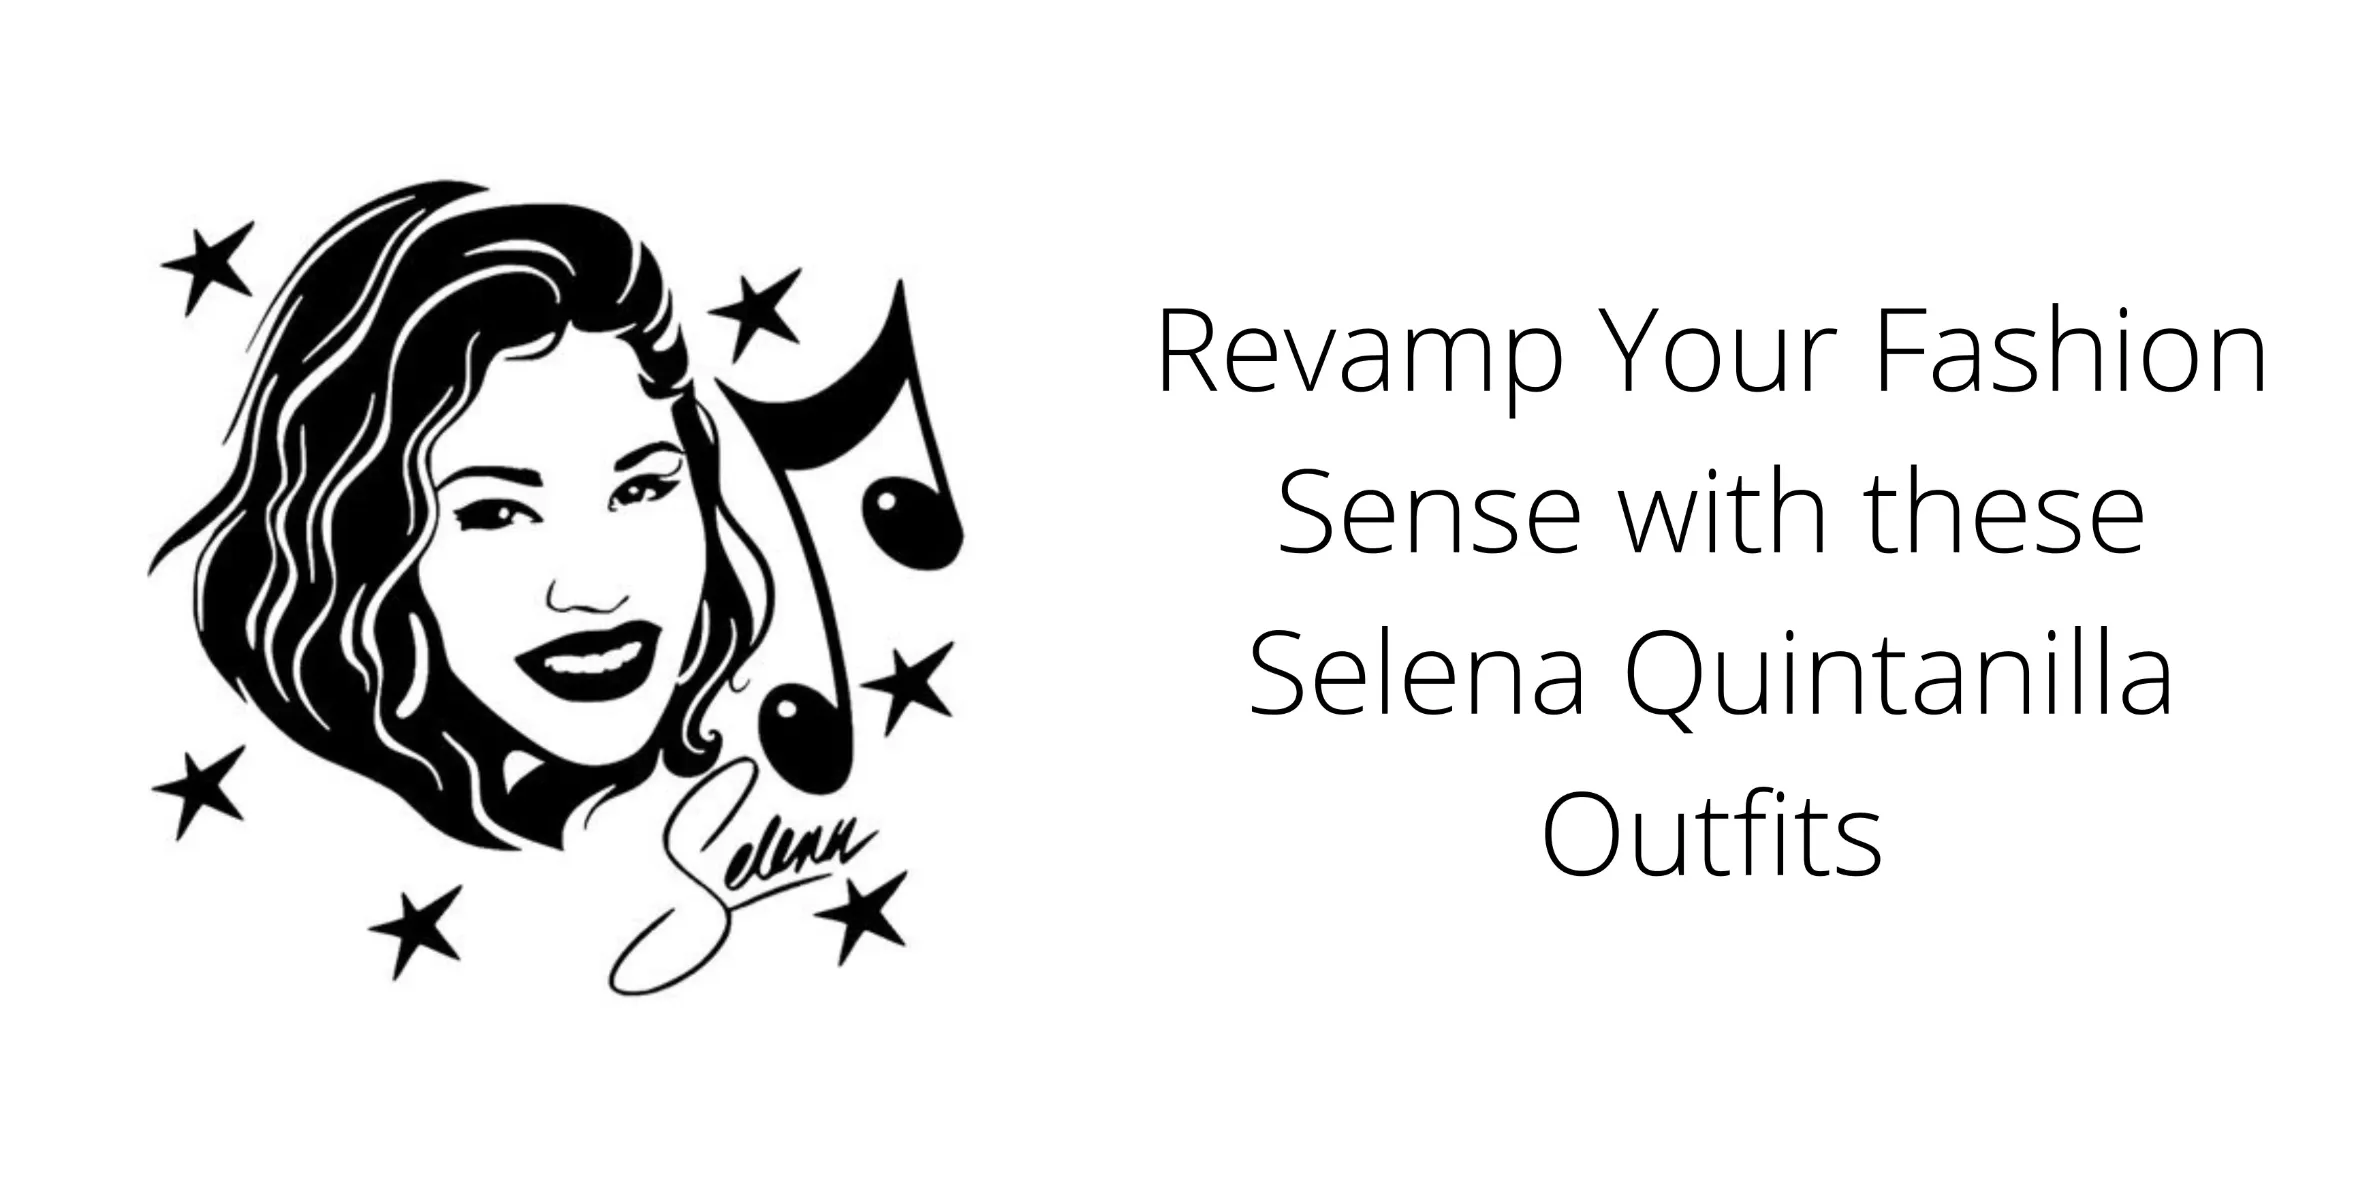 Selena Quintanilla Black and White Cropped Jacket